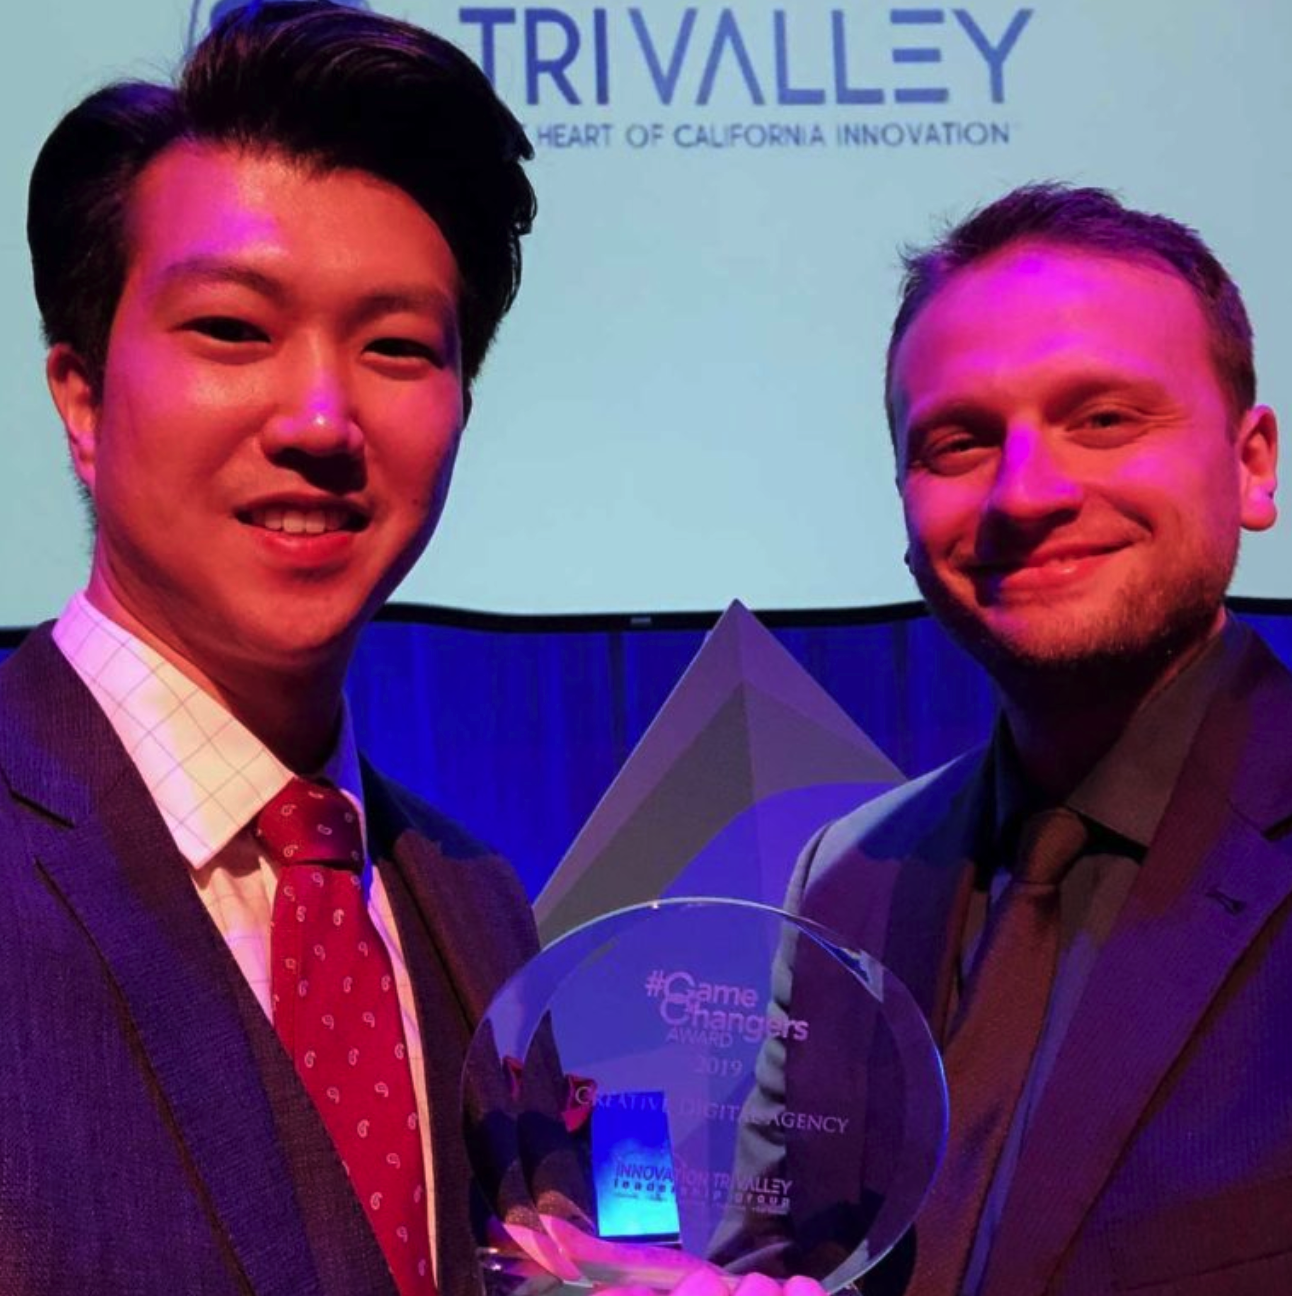 CDA CEO Jin Kim Wins #GameChangers Award from Innovation Tri-Valley